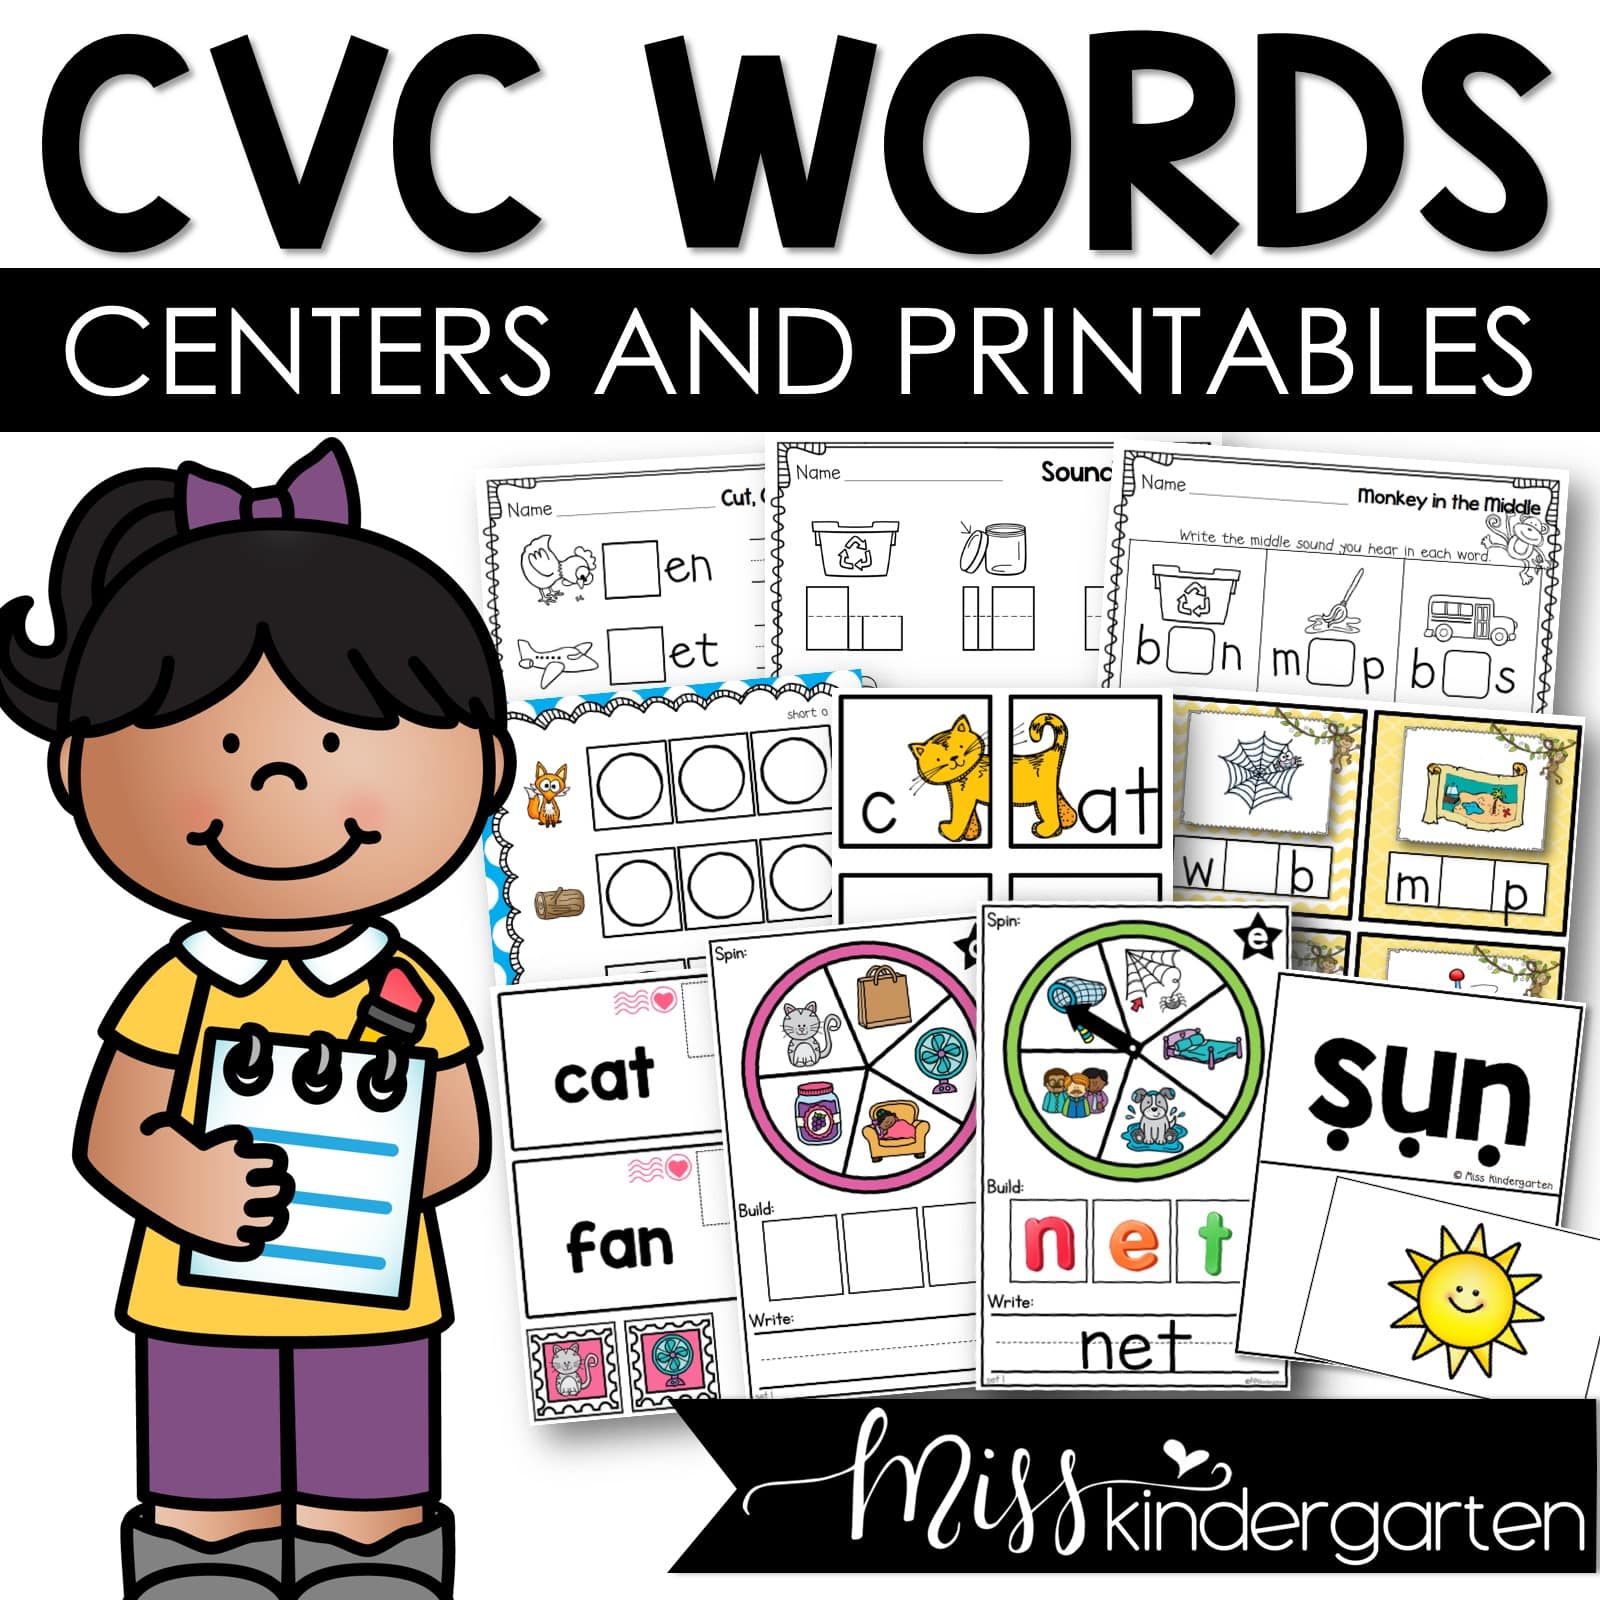 cvc-words-worksheet-for-kindergarten-free-printable-cvc-word